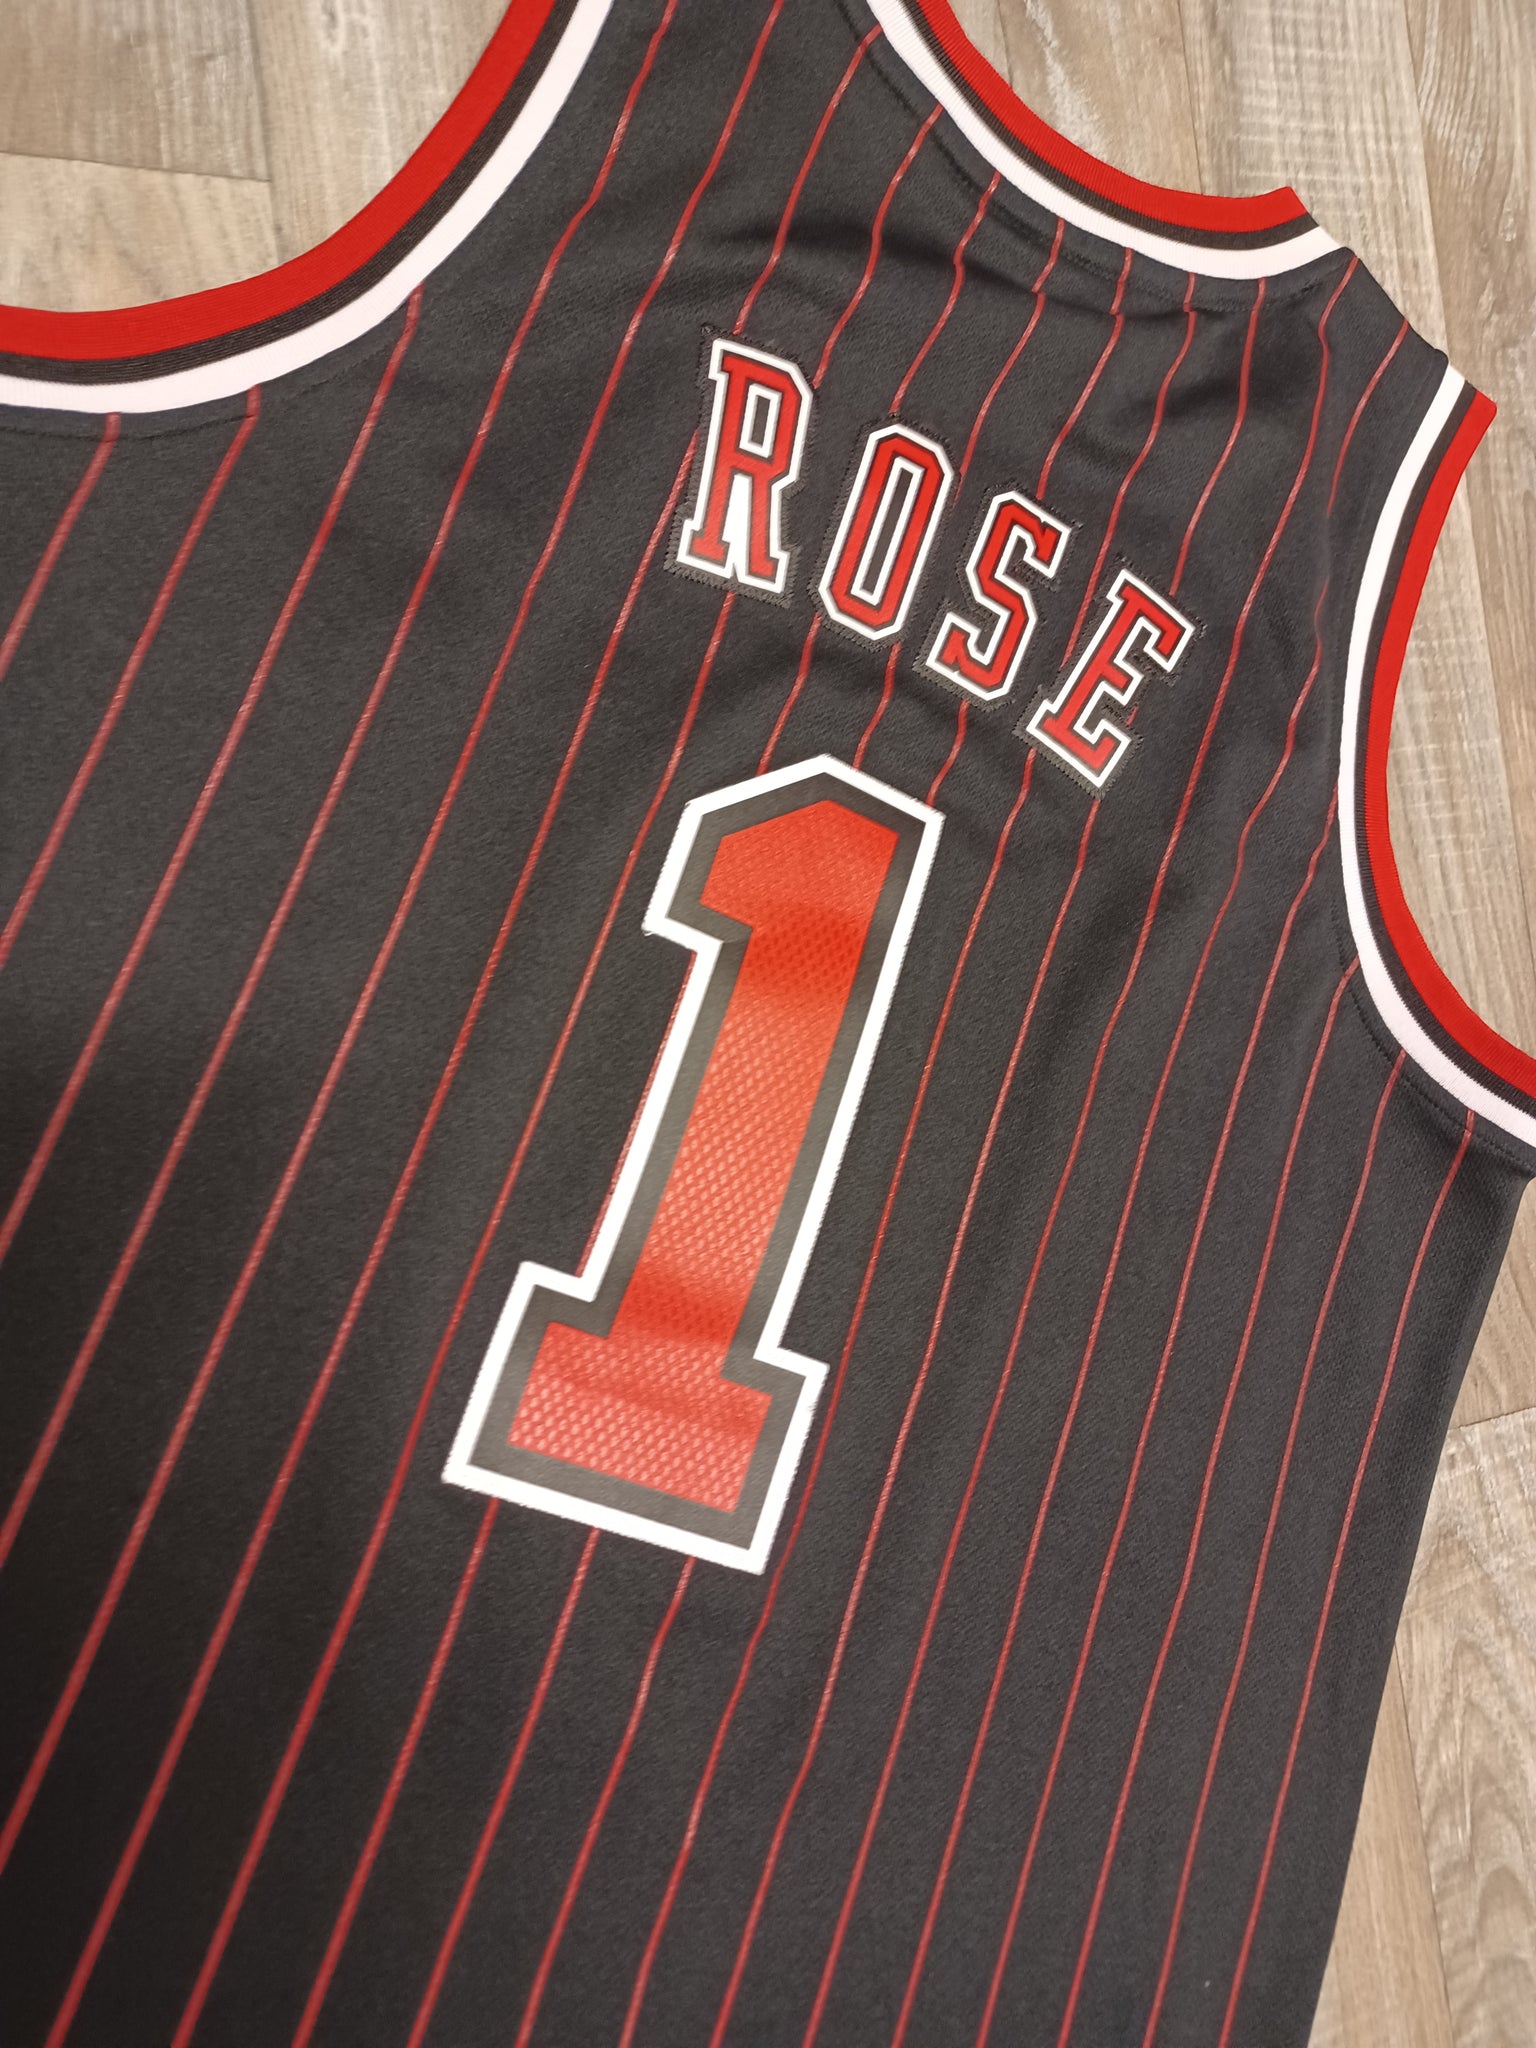 Size S Derrick Rose NBA Jerseys for sale